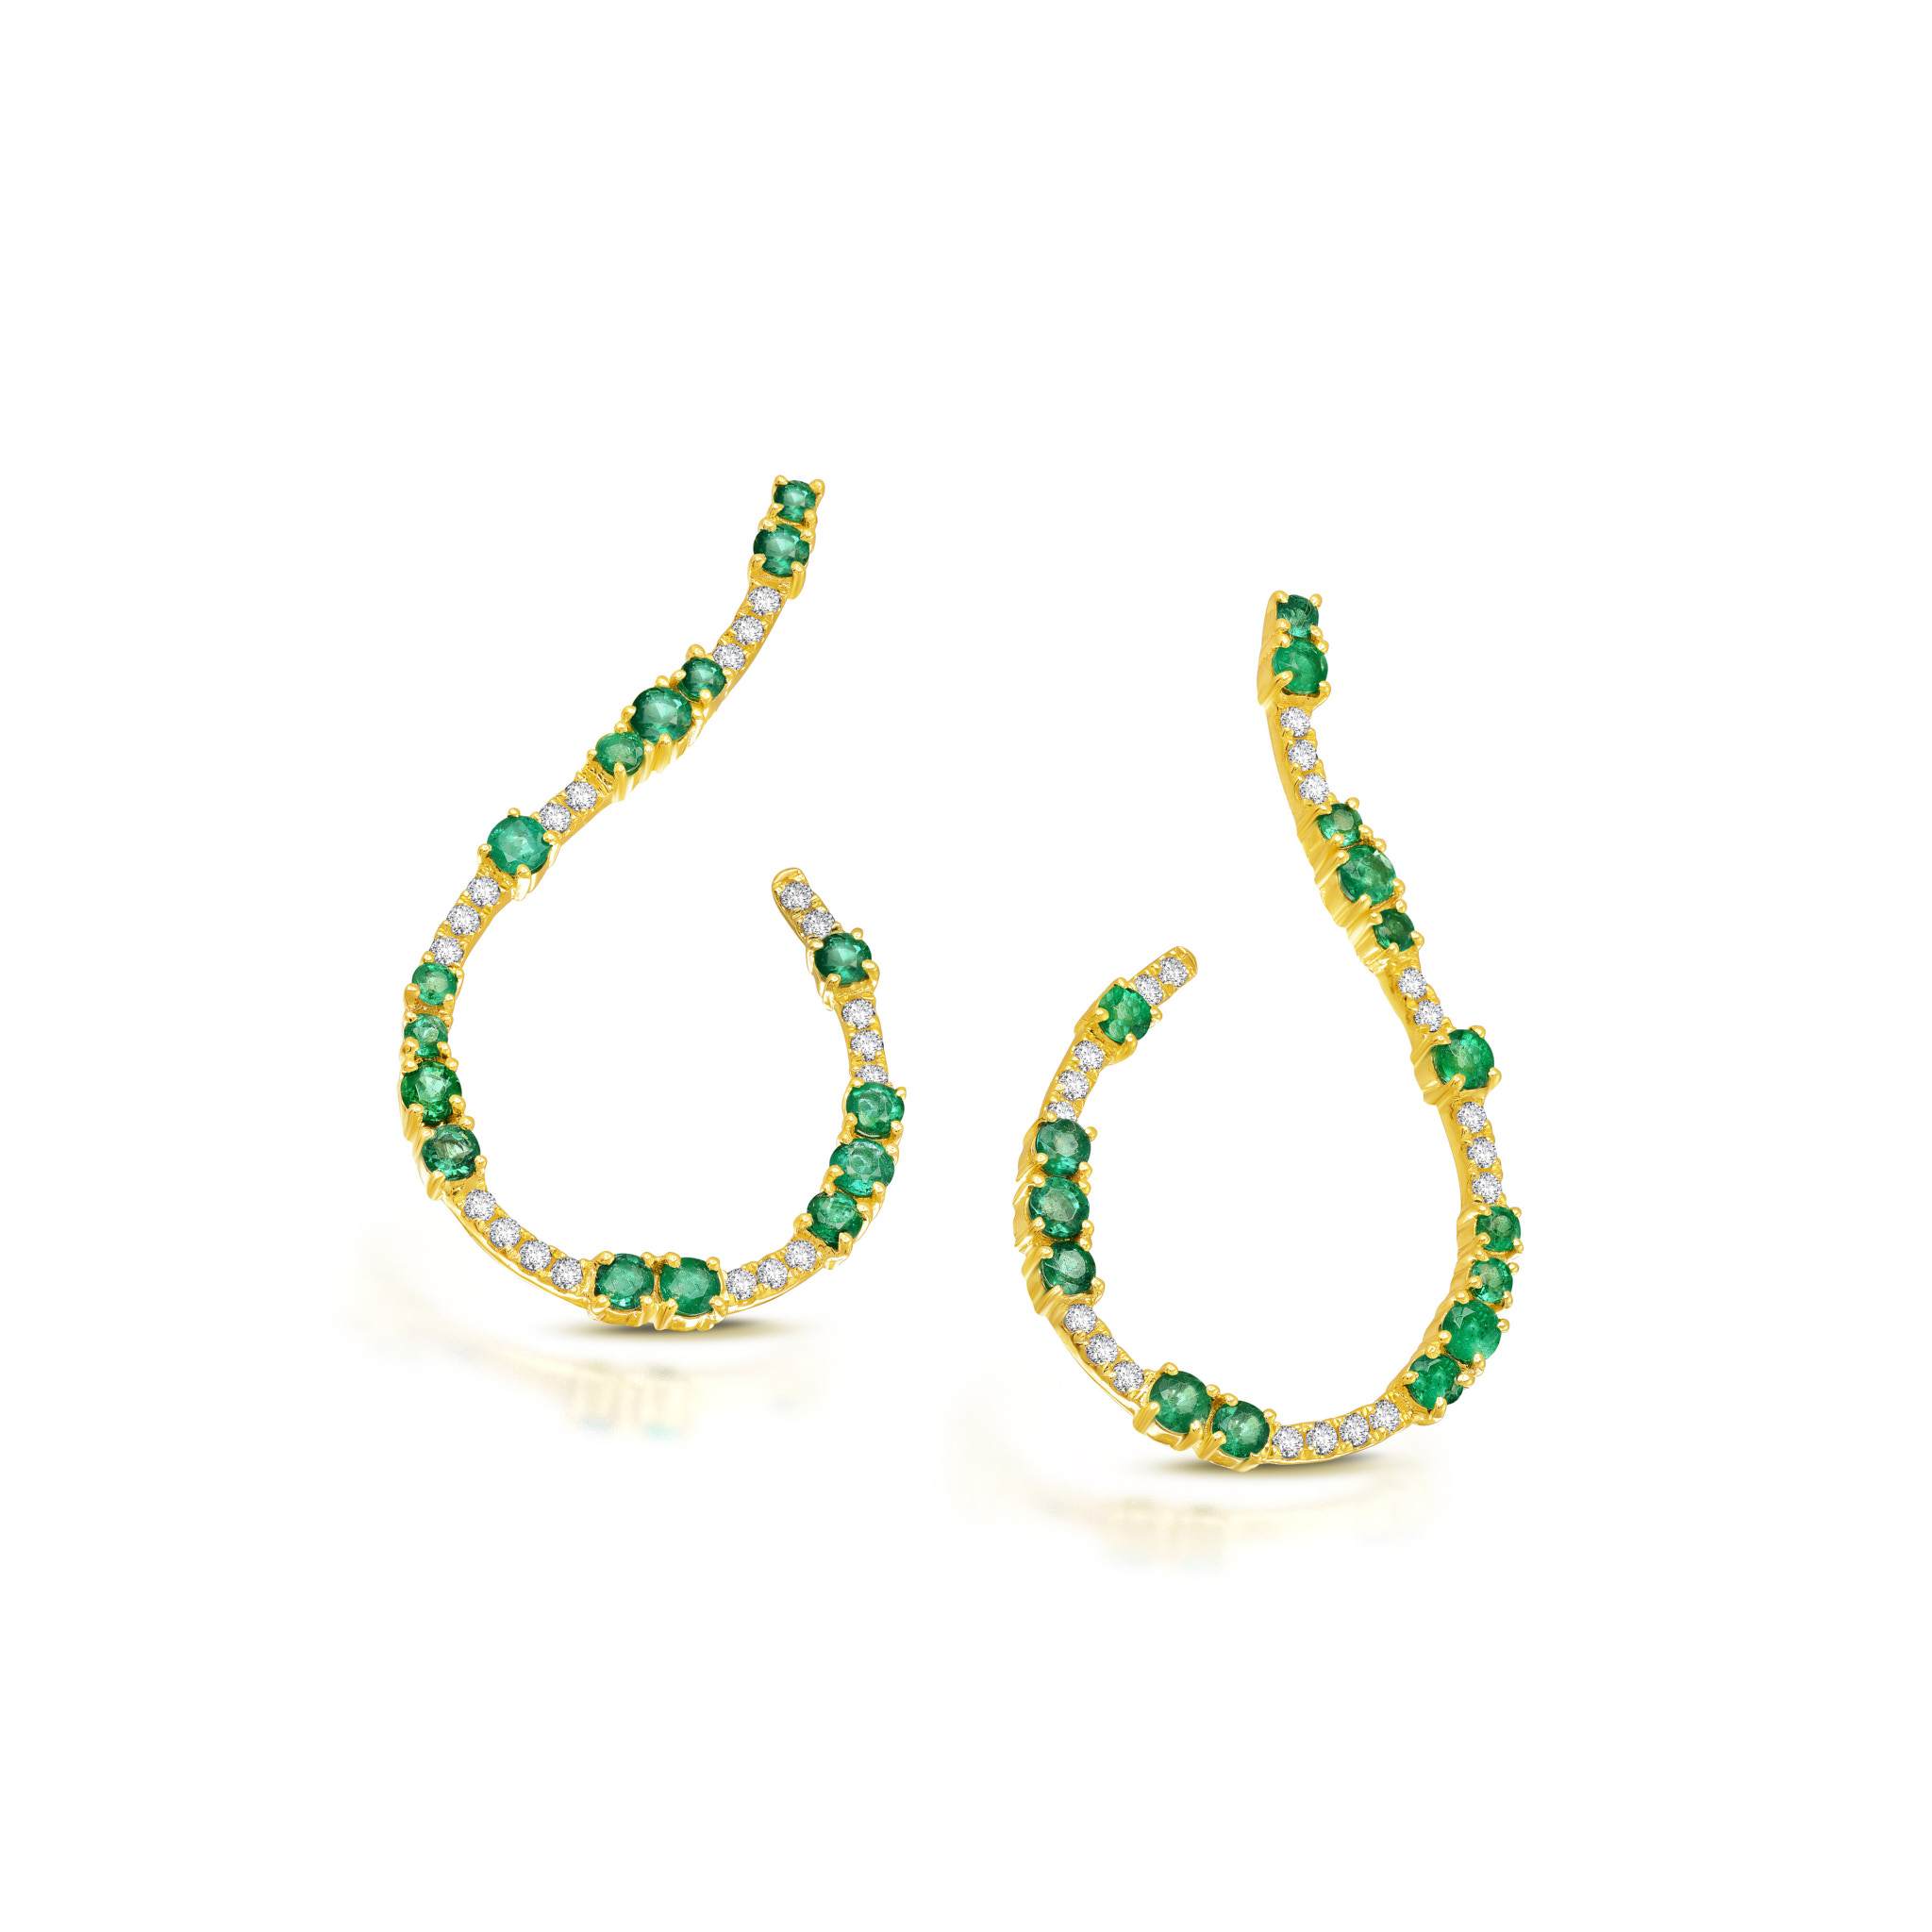 Graziela Gems - Emerald Mega Swirl Earrings - 